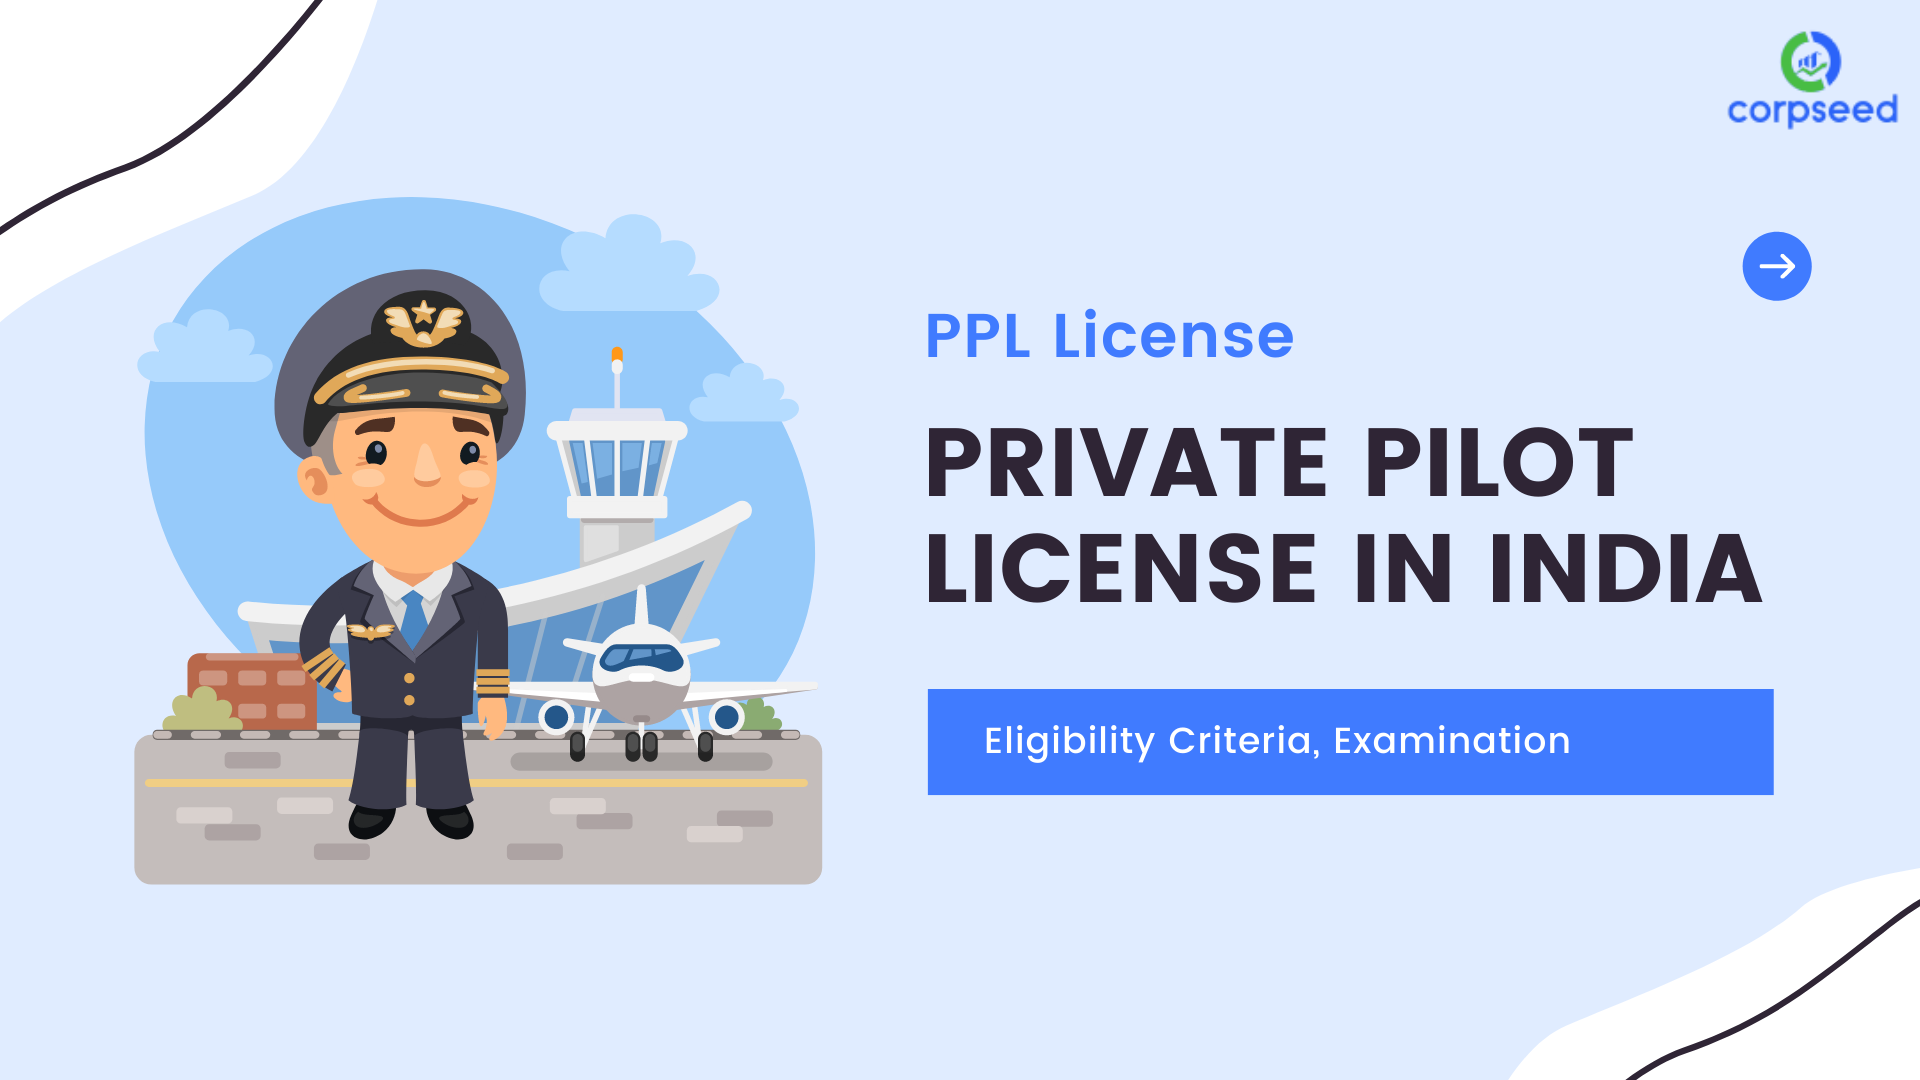 PPL License (Private Pilot License) in India Eligibility Criteria, Examination.png